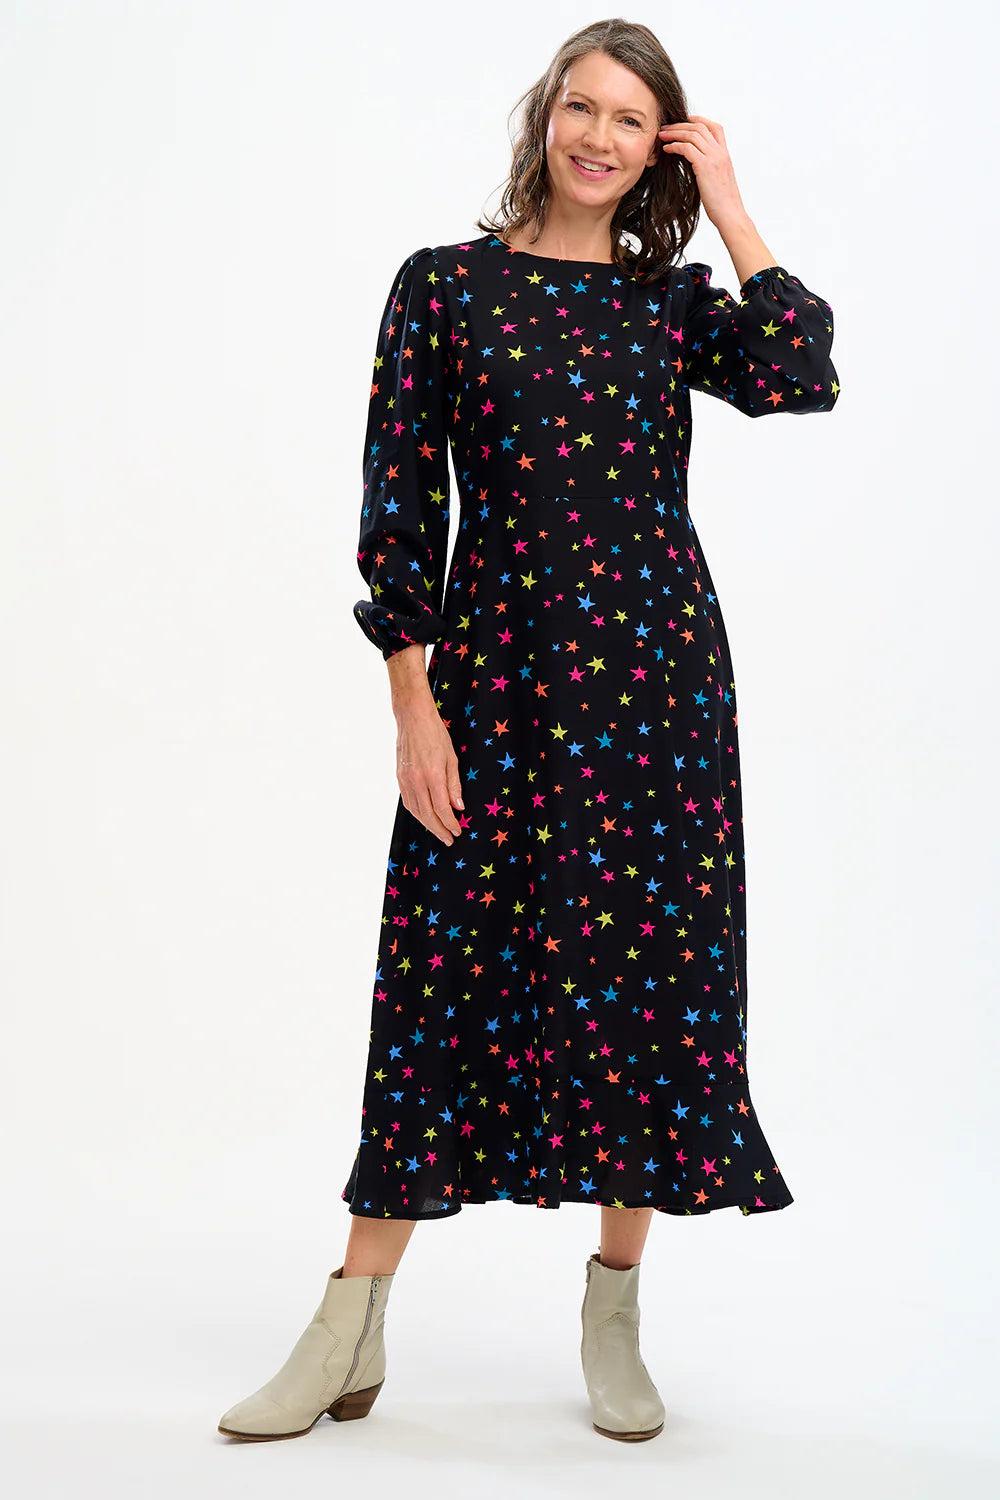 SUGARHILL BRIGHTON-Bliss Midi Dress - Black, Rainbow Star Confetti